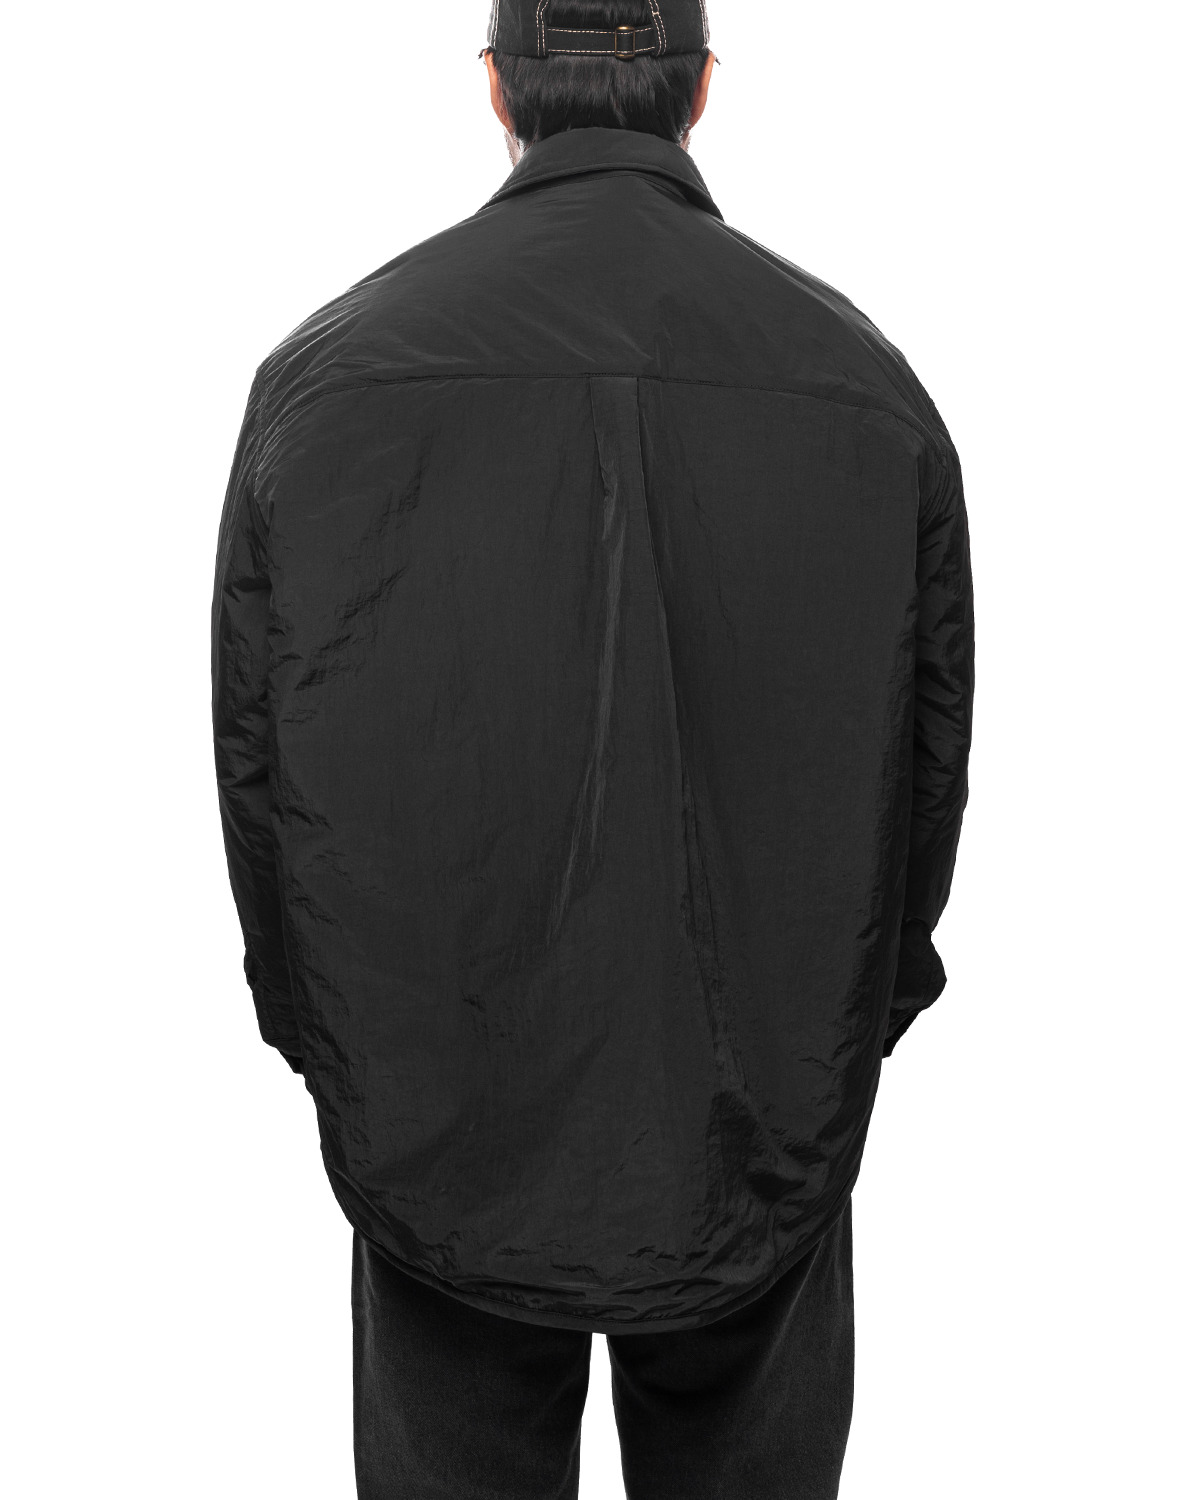 Tech Borrowed Jacket Padded Black - 3